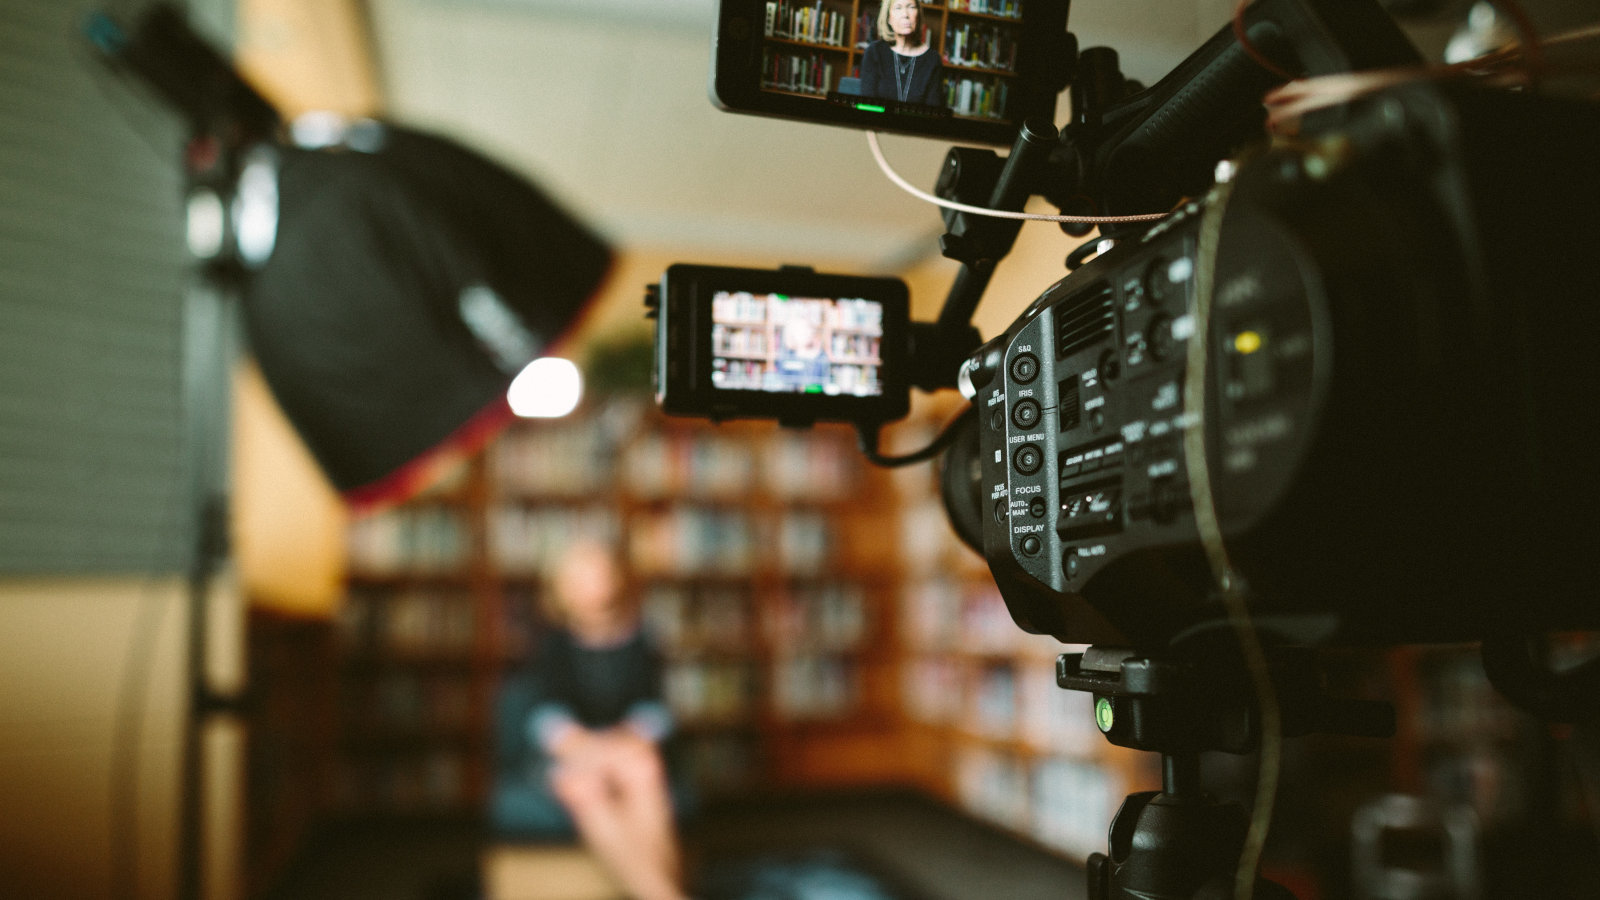 How mediaCastpro can help video journalism